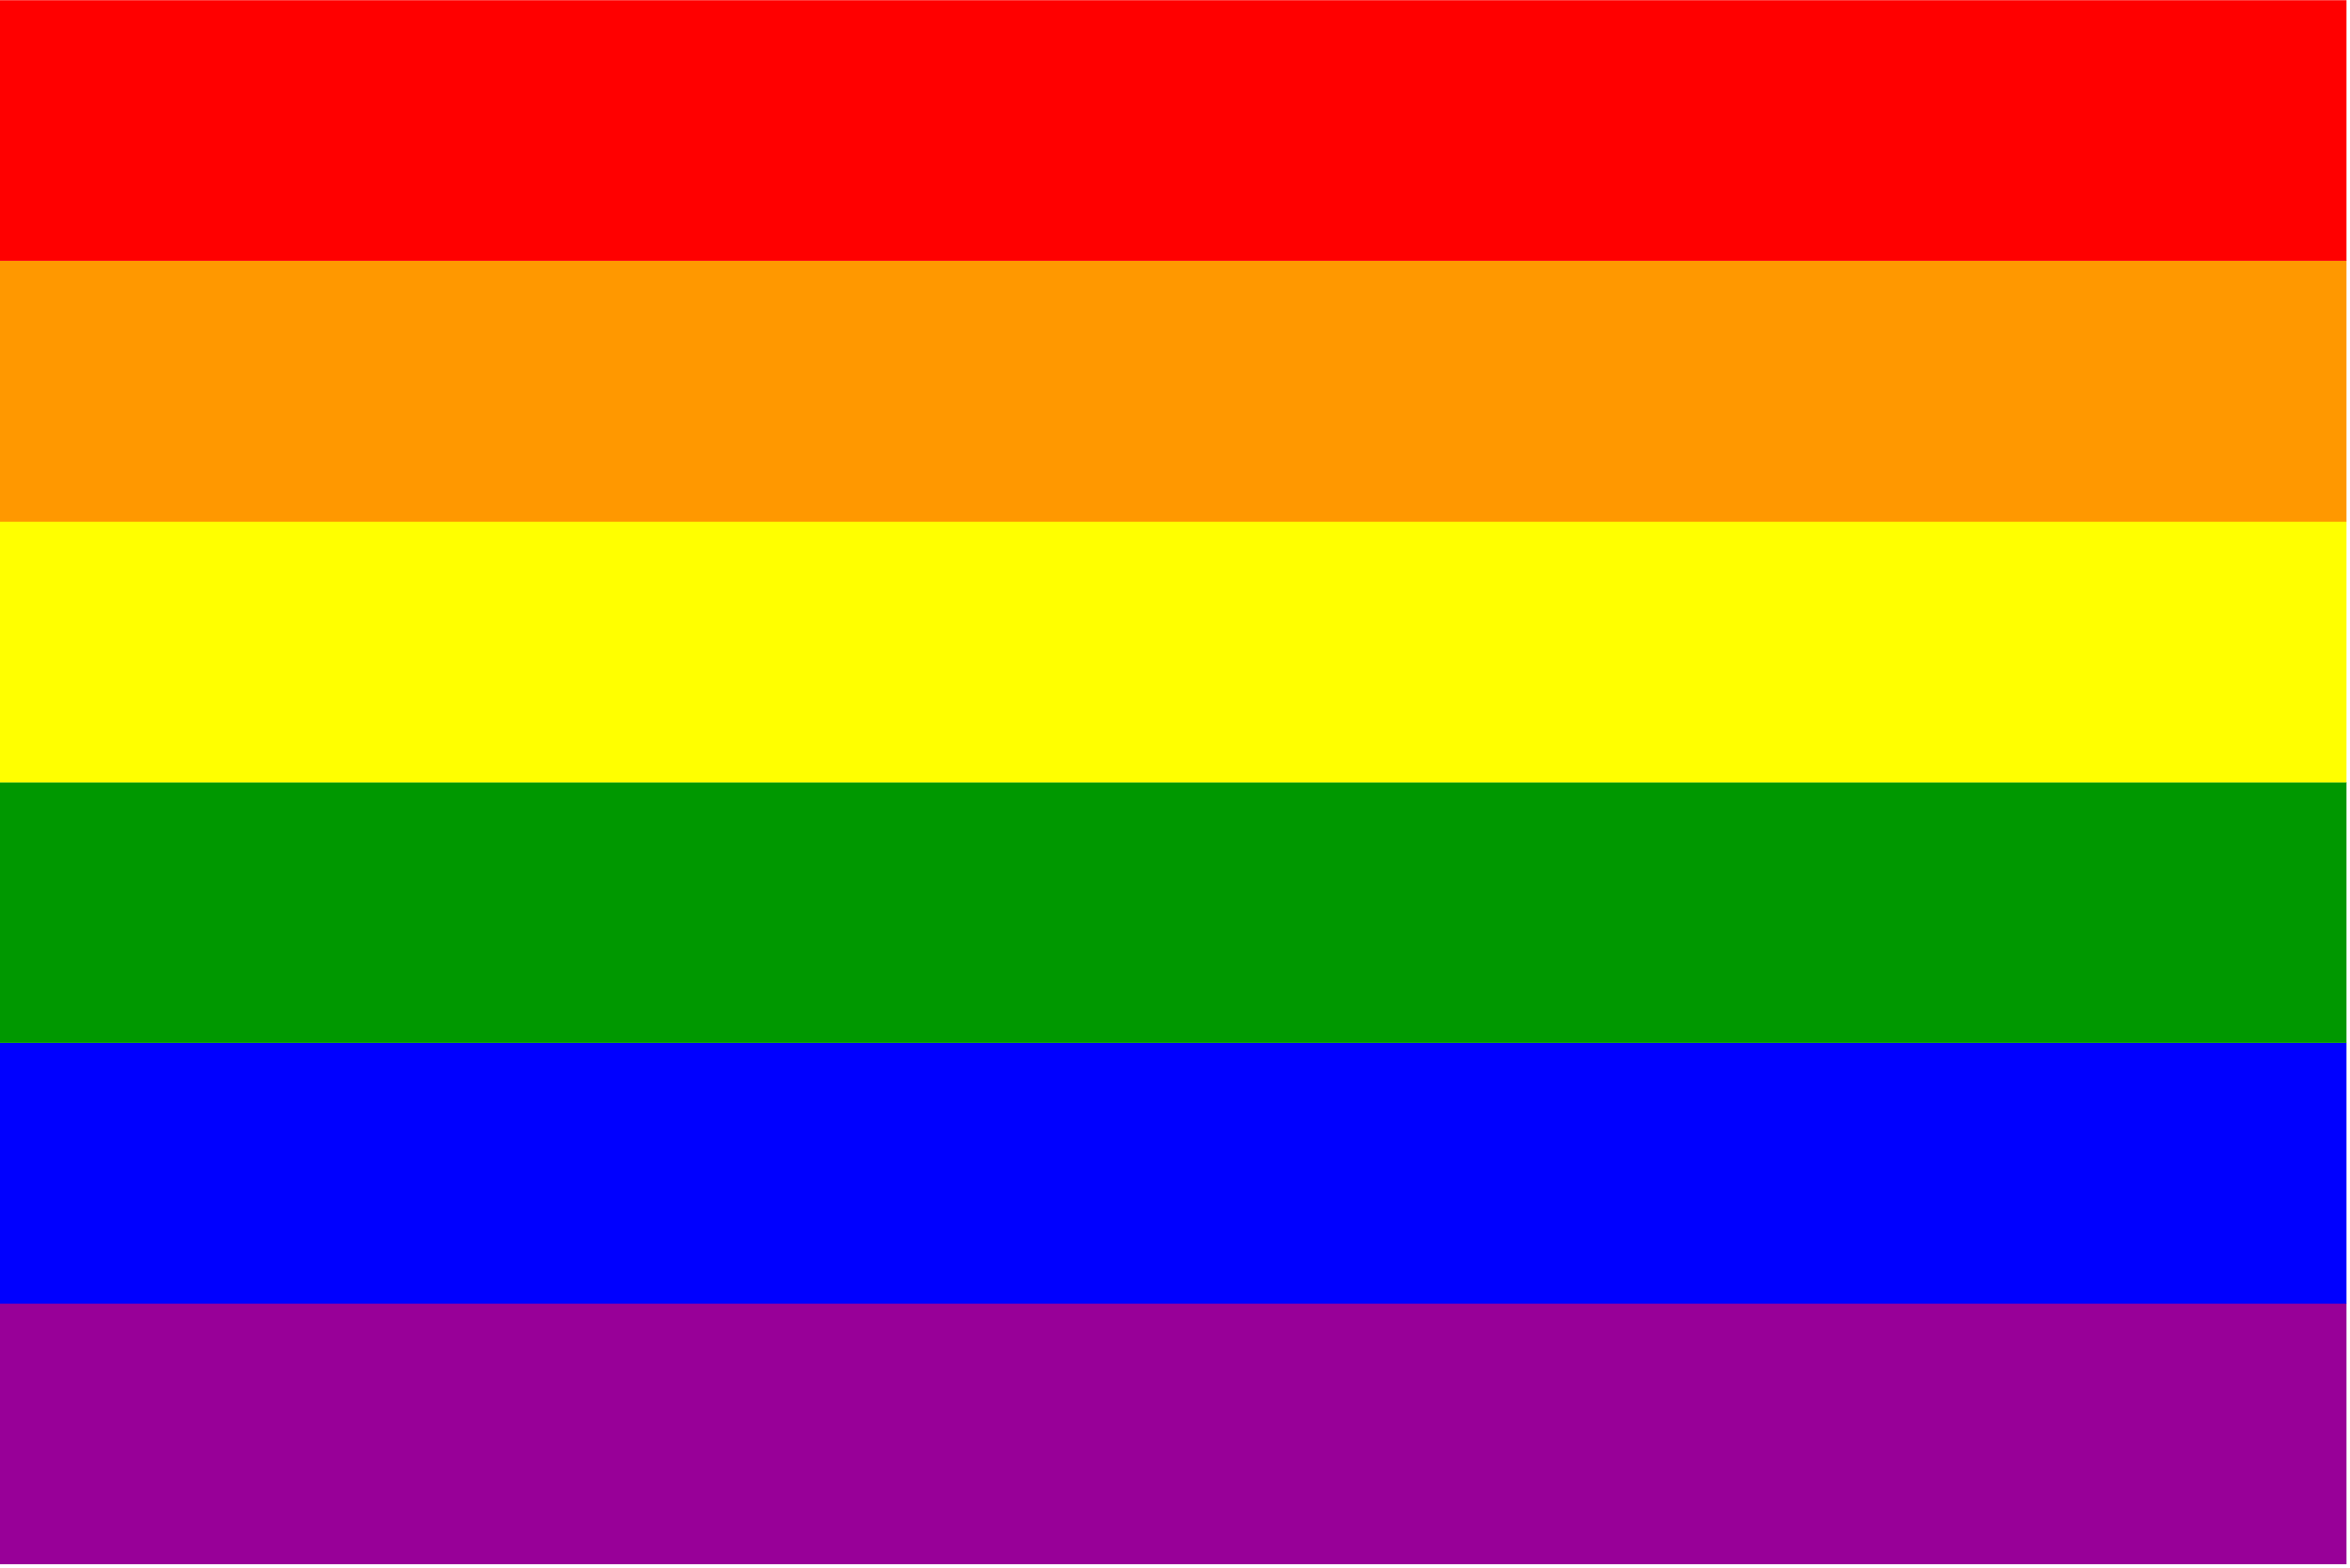 gay_pride_flag_kimiko_r.png